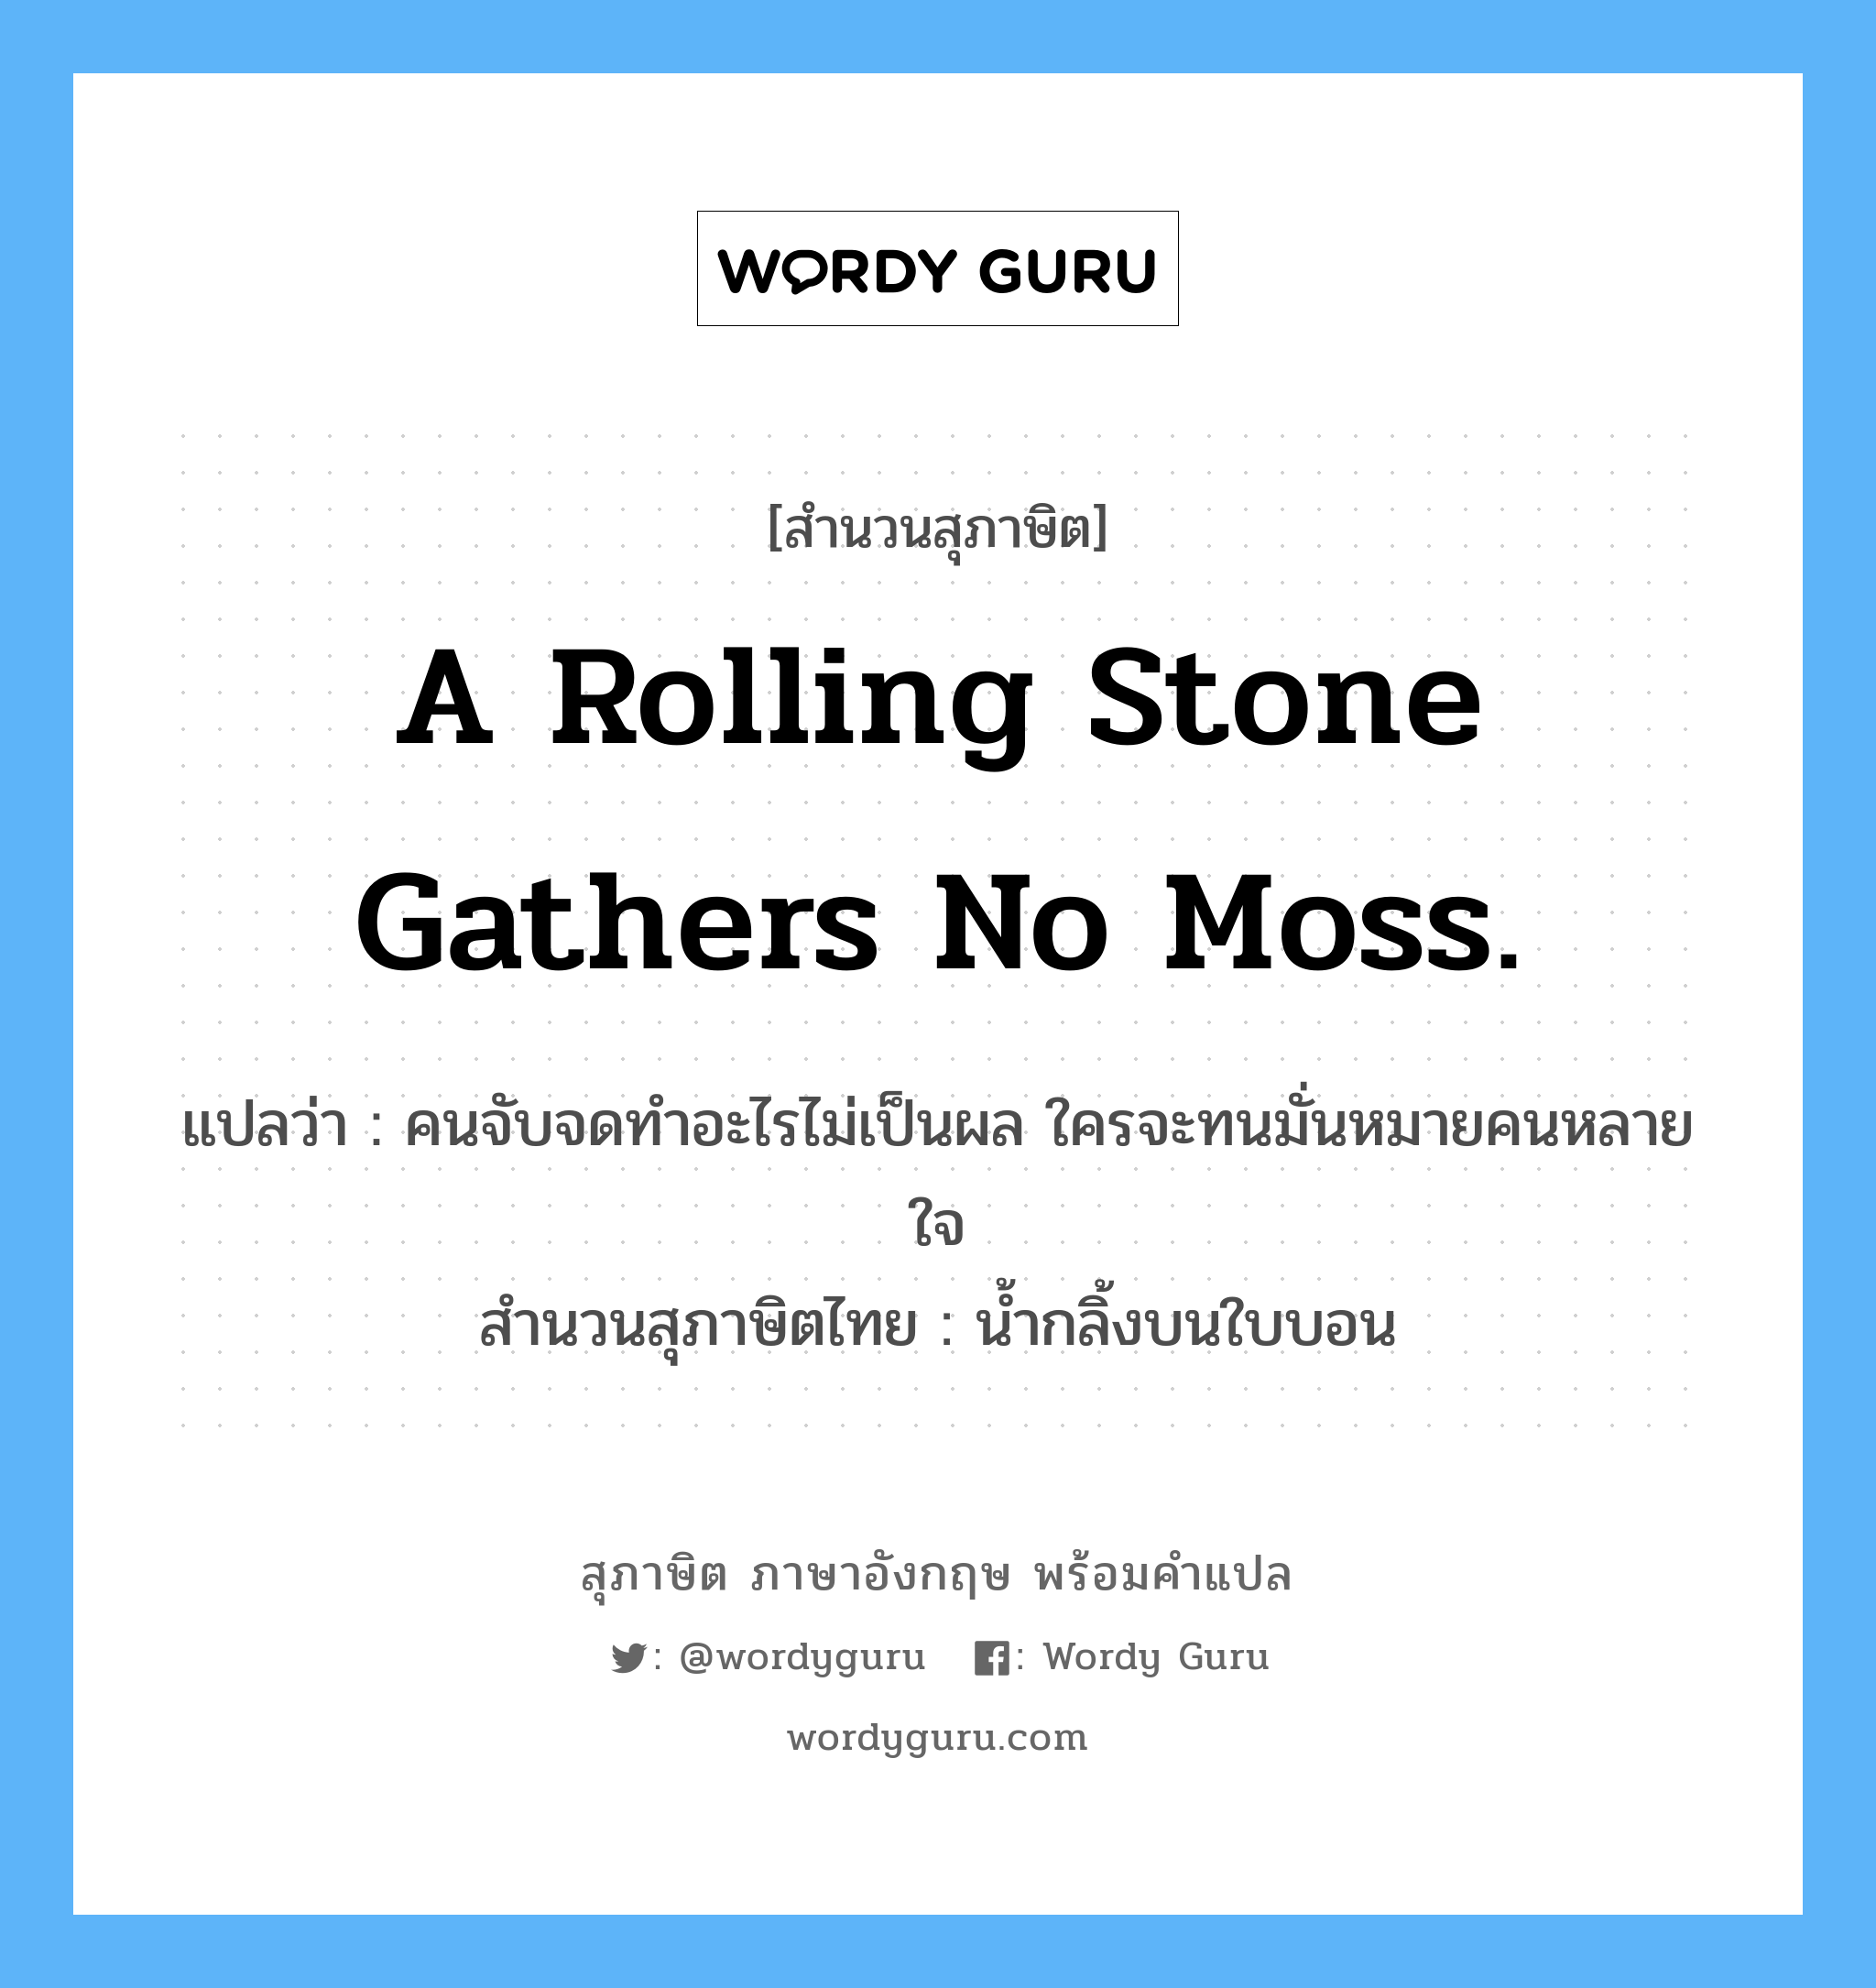 A rolling stone gathers no moss.